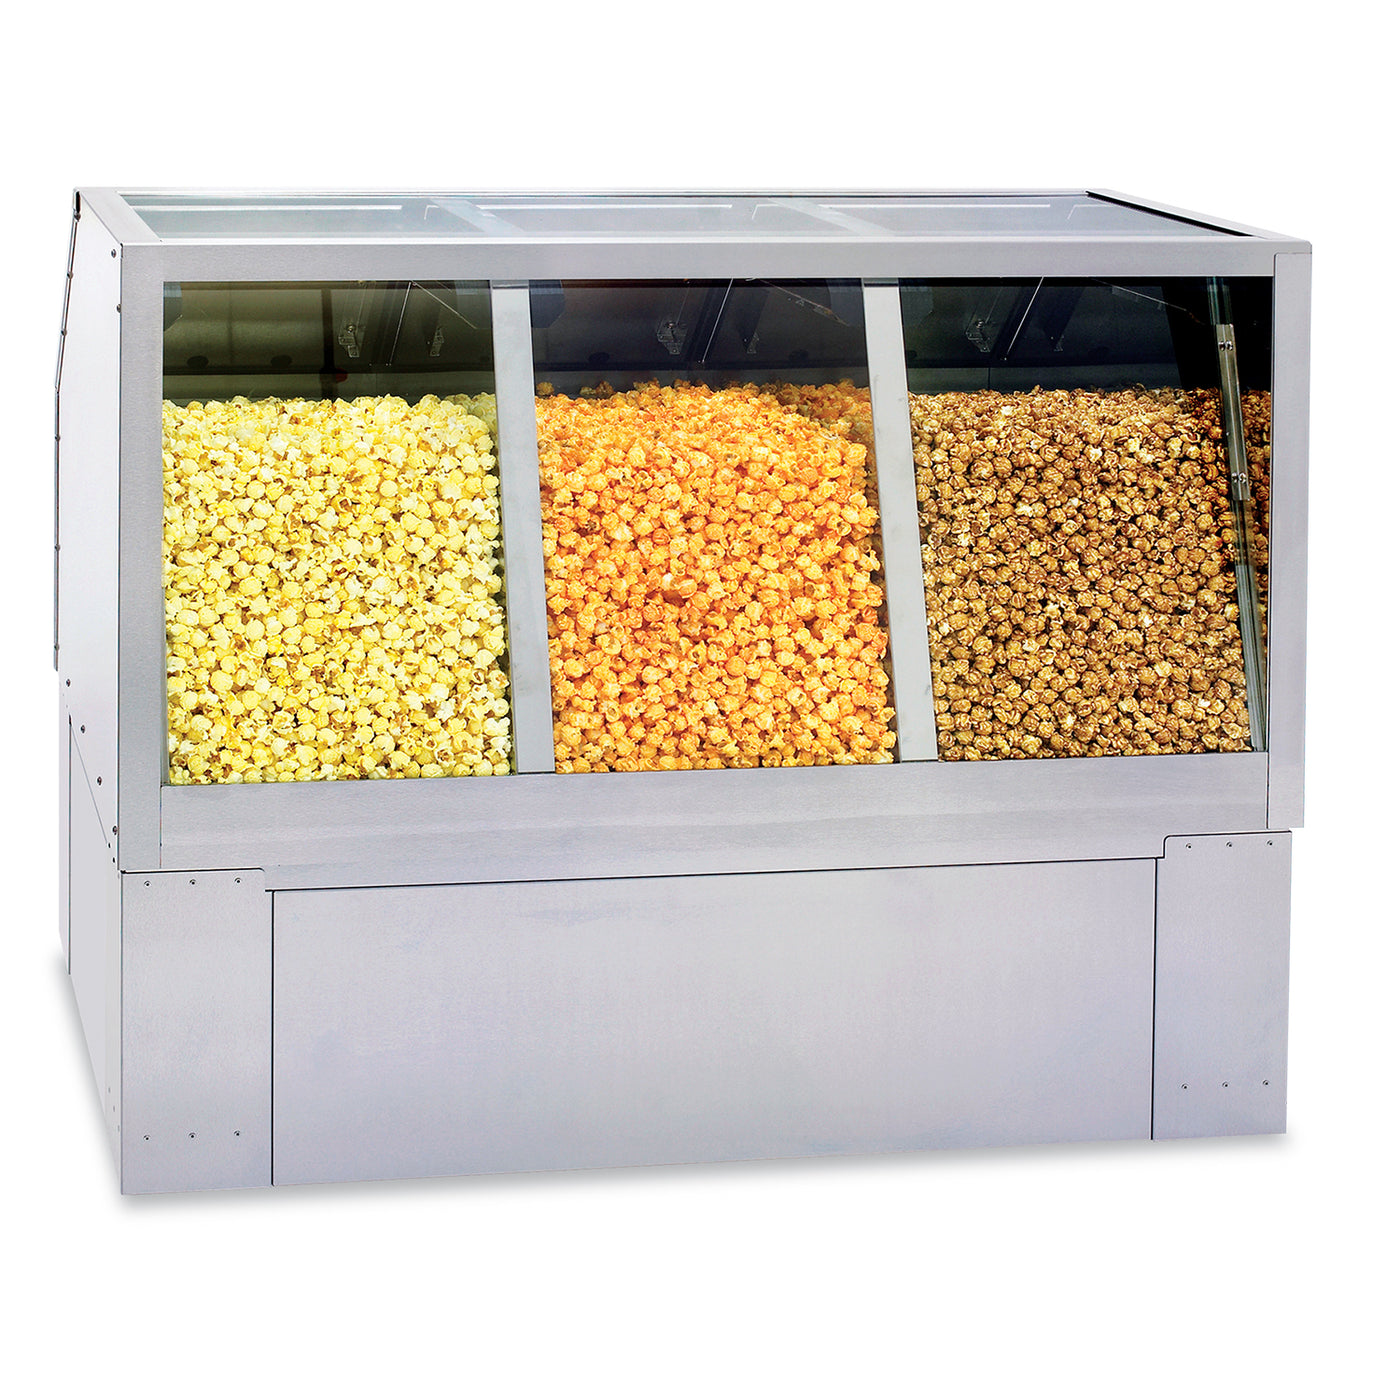 Street Vendor Popcorn Machines